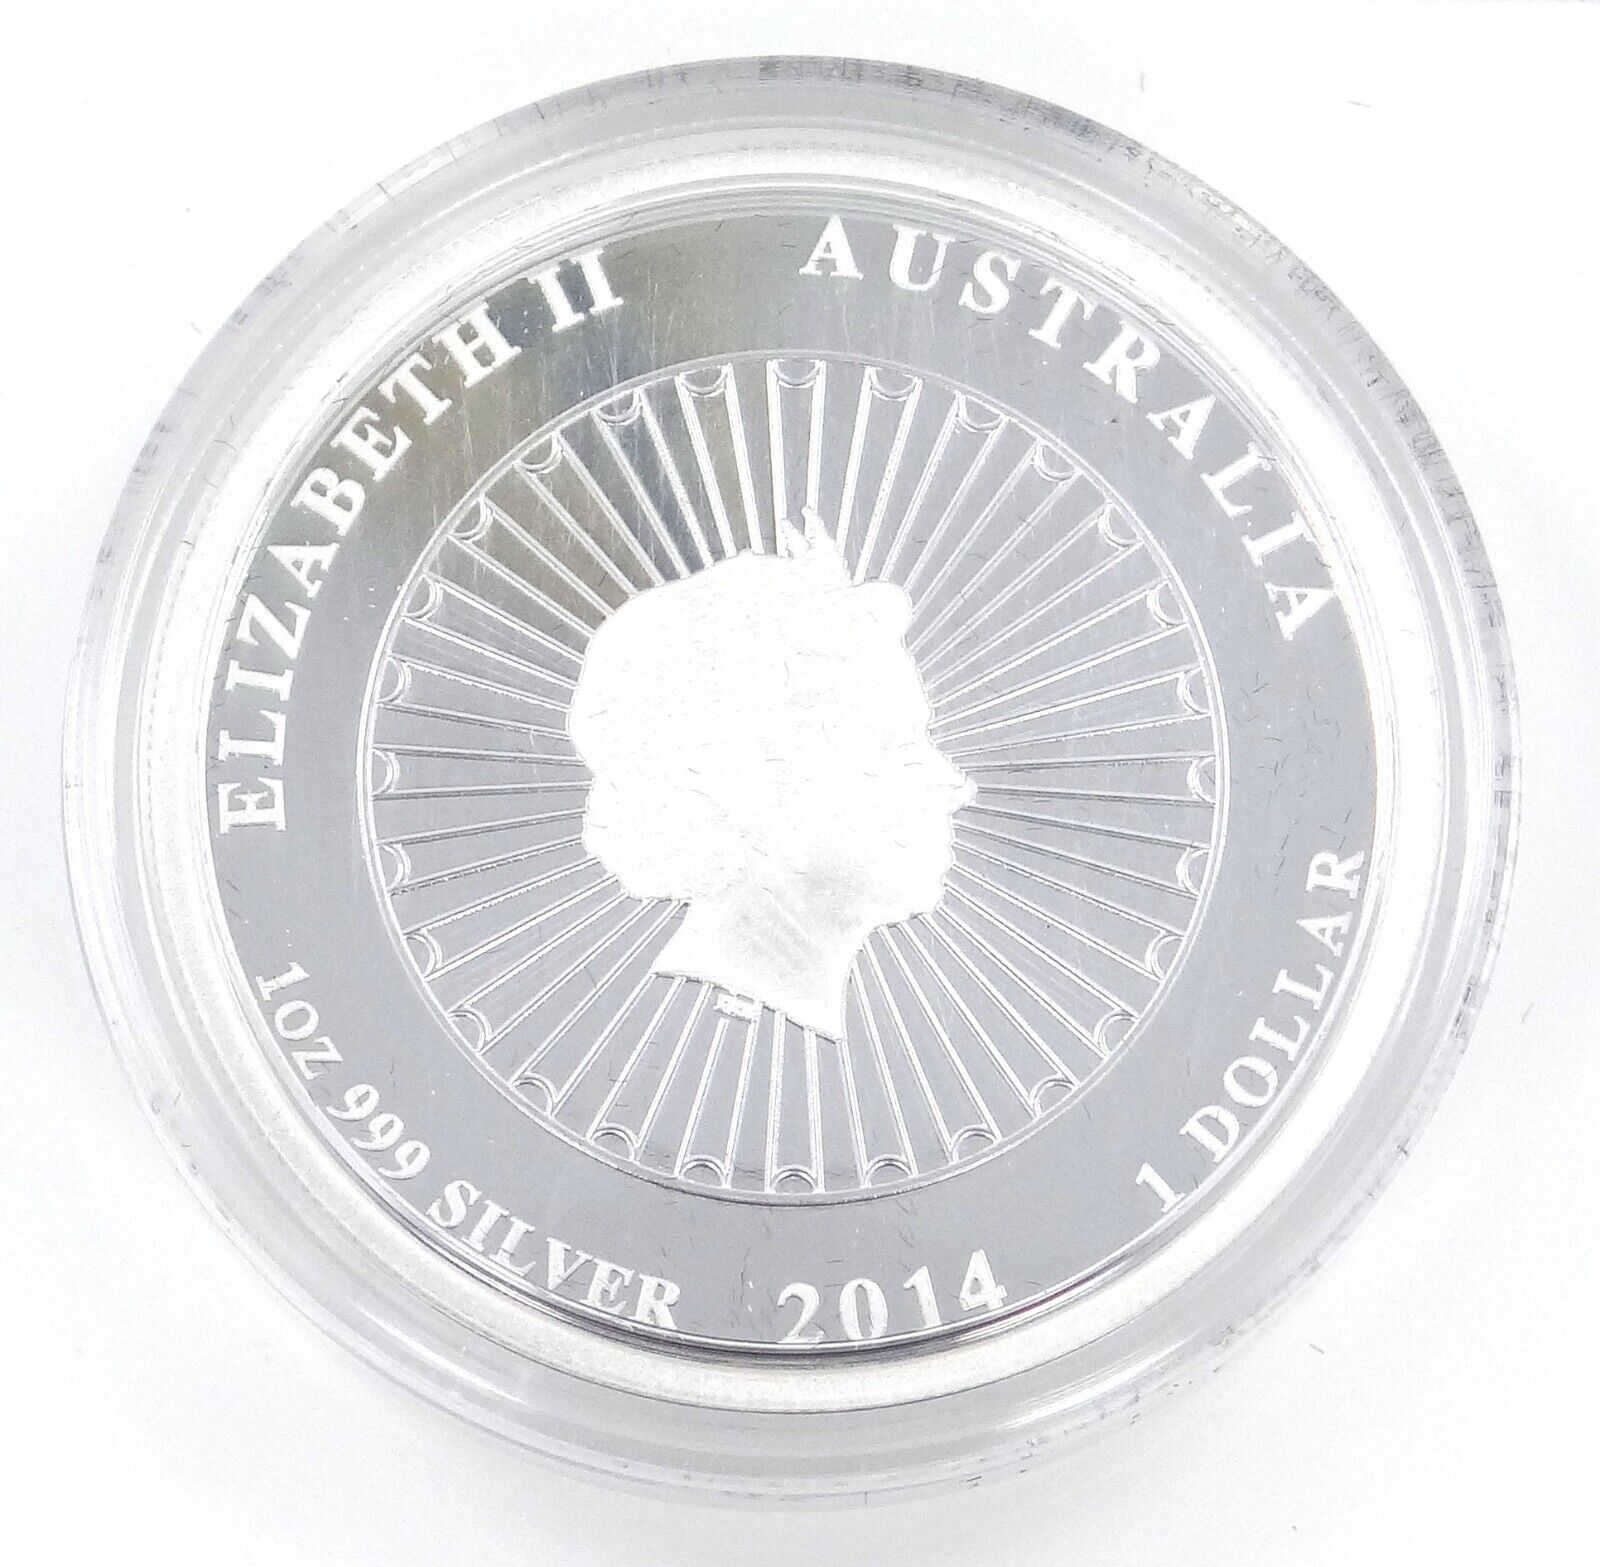 1 Oz Silver Coin 2014 $1 Australia Australian Abalone Shell Proof Coin Version 3-classypw.com-1